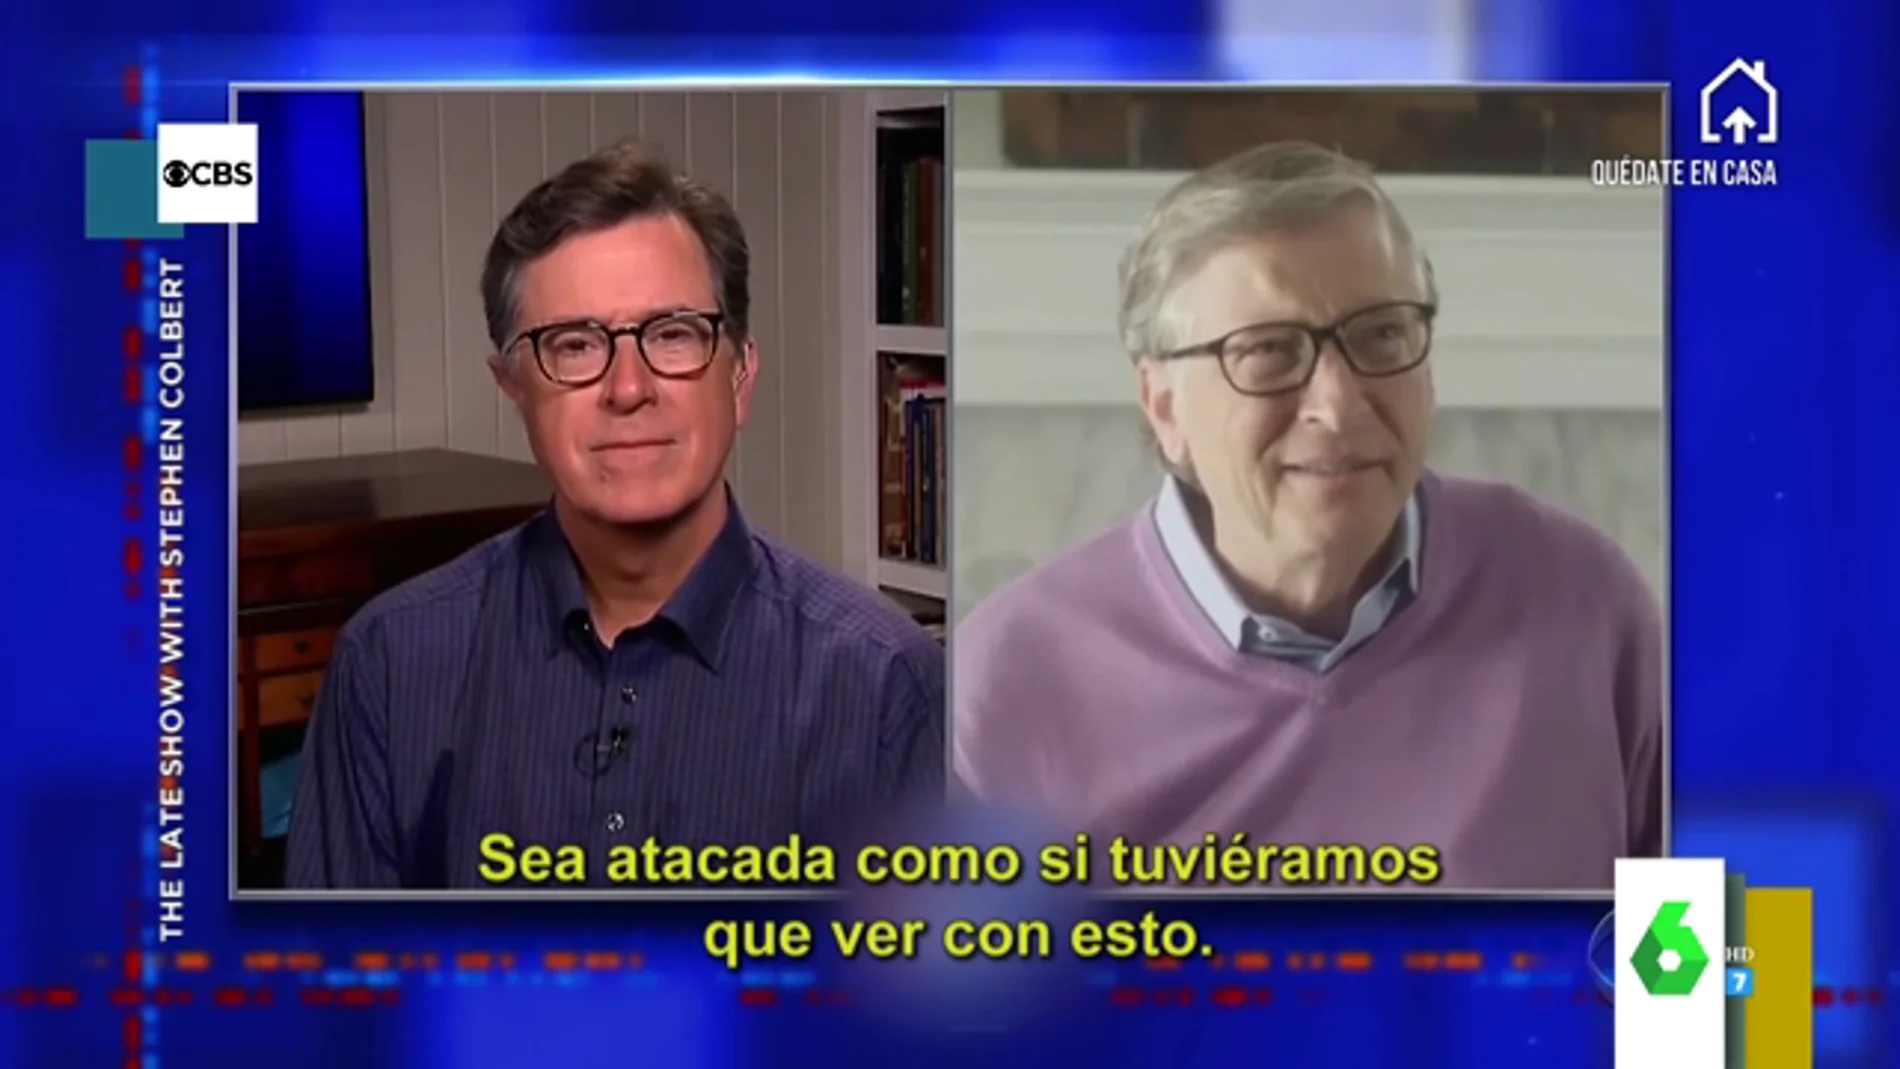 El presentador Stephen Colbert entrevista a Bill Gates 